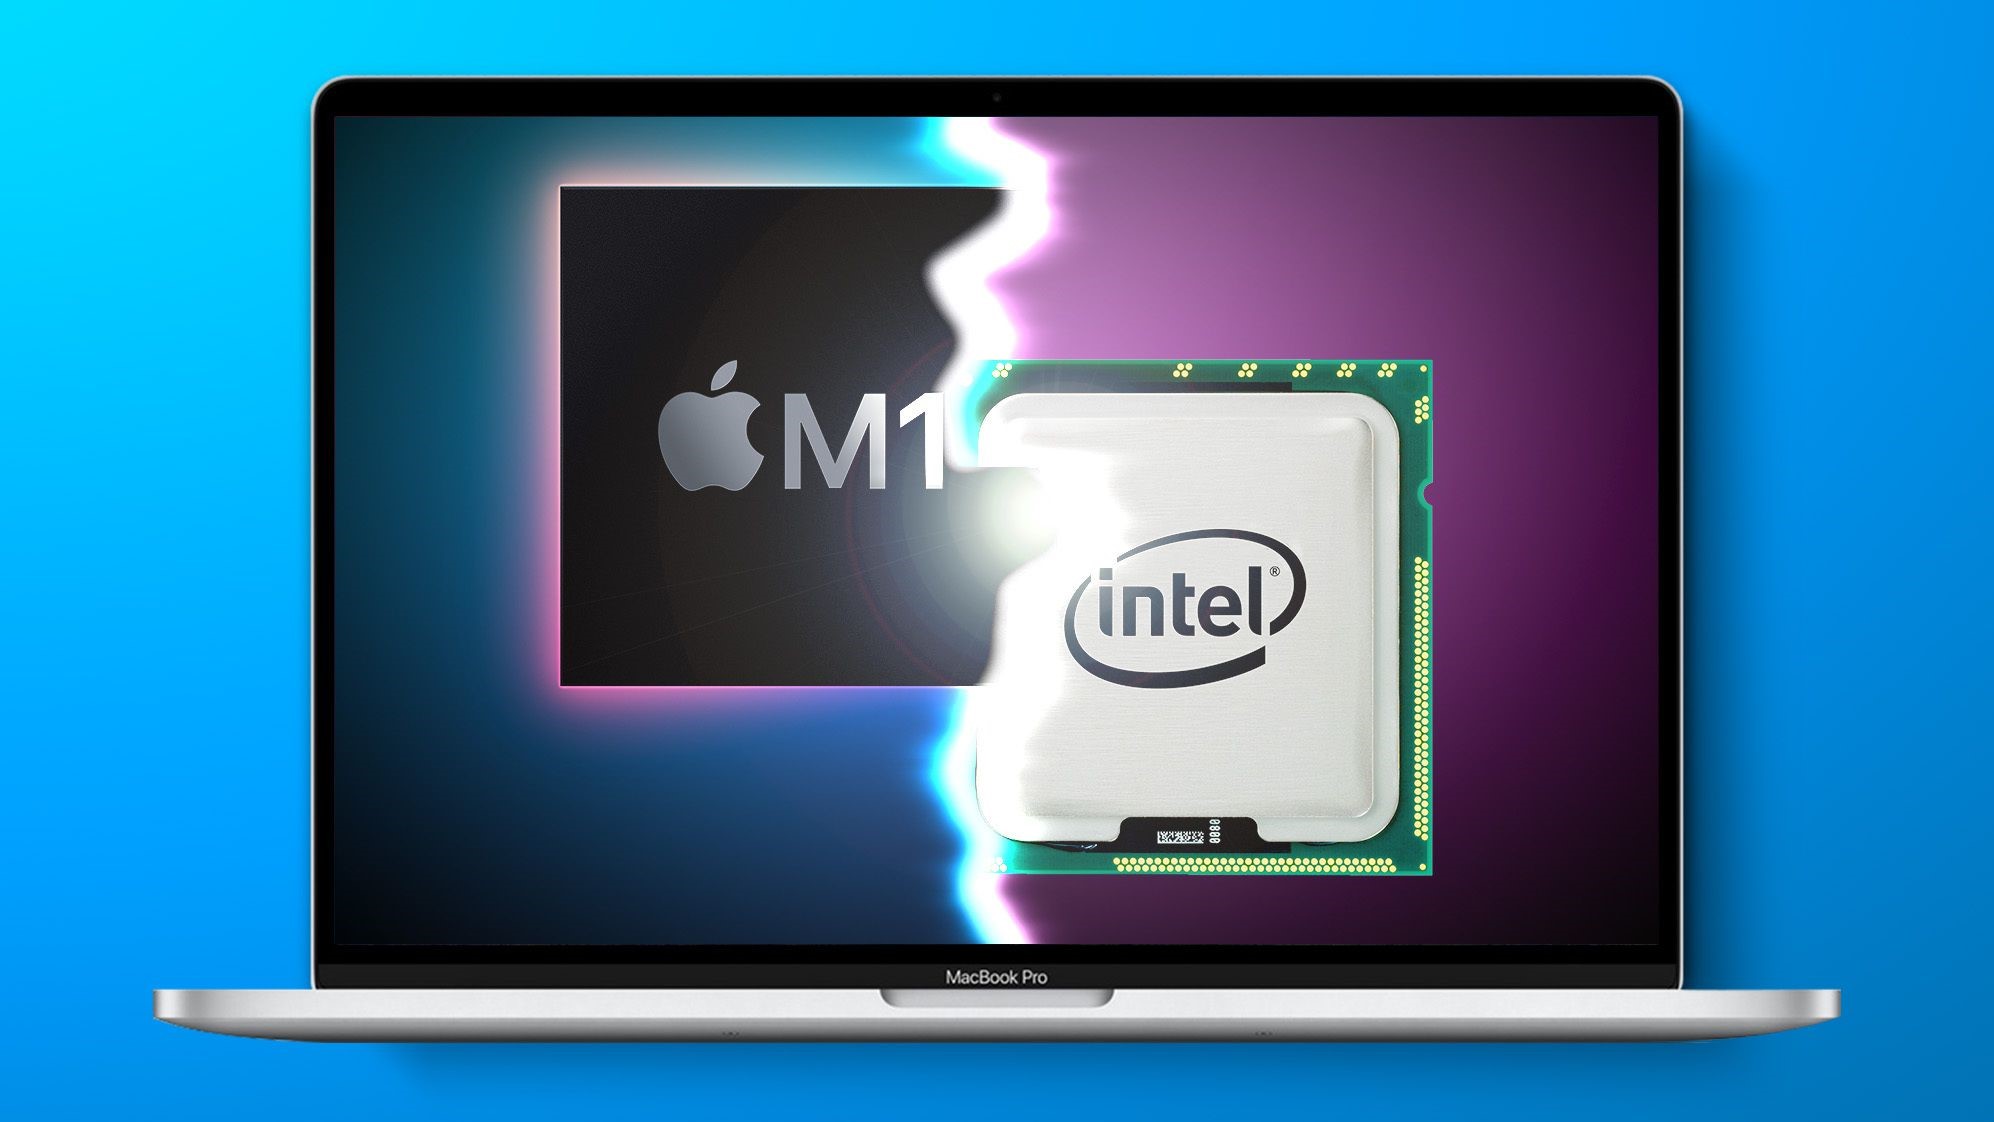 Intel Made A Pun On MacBook